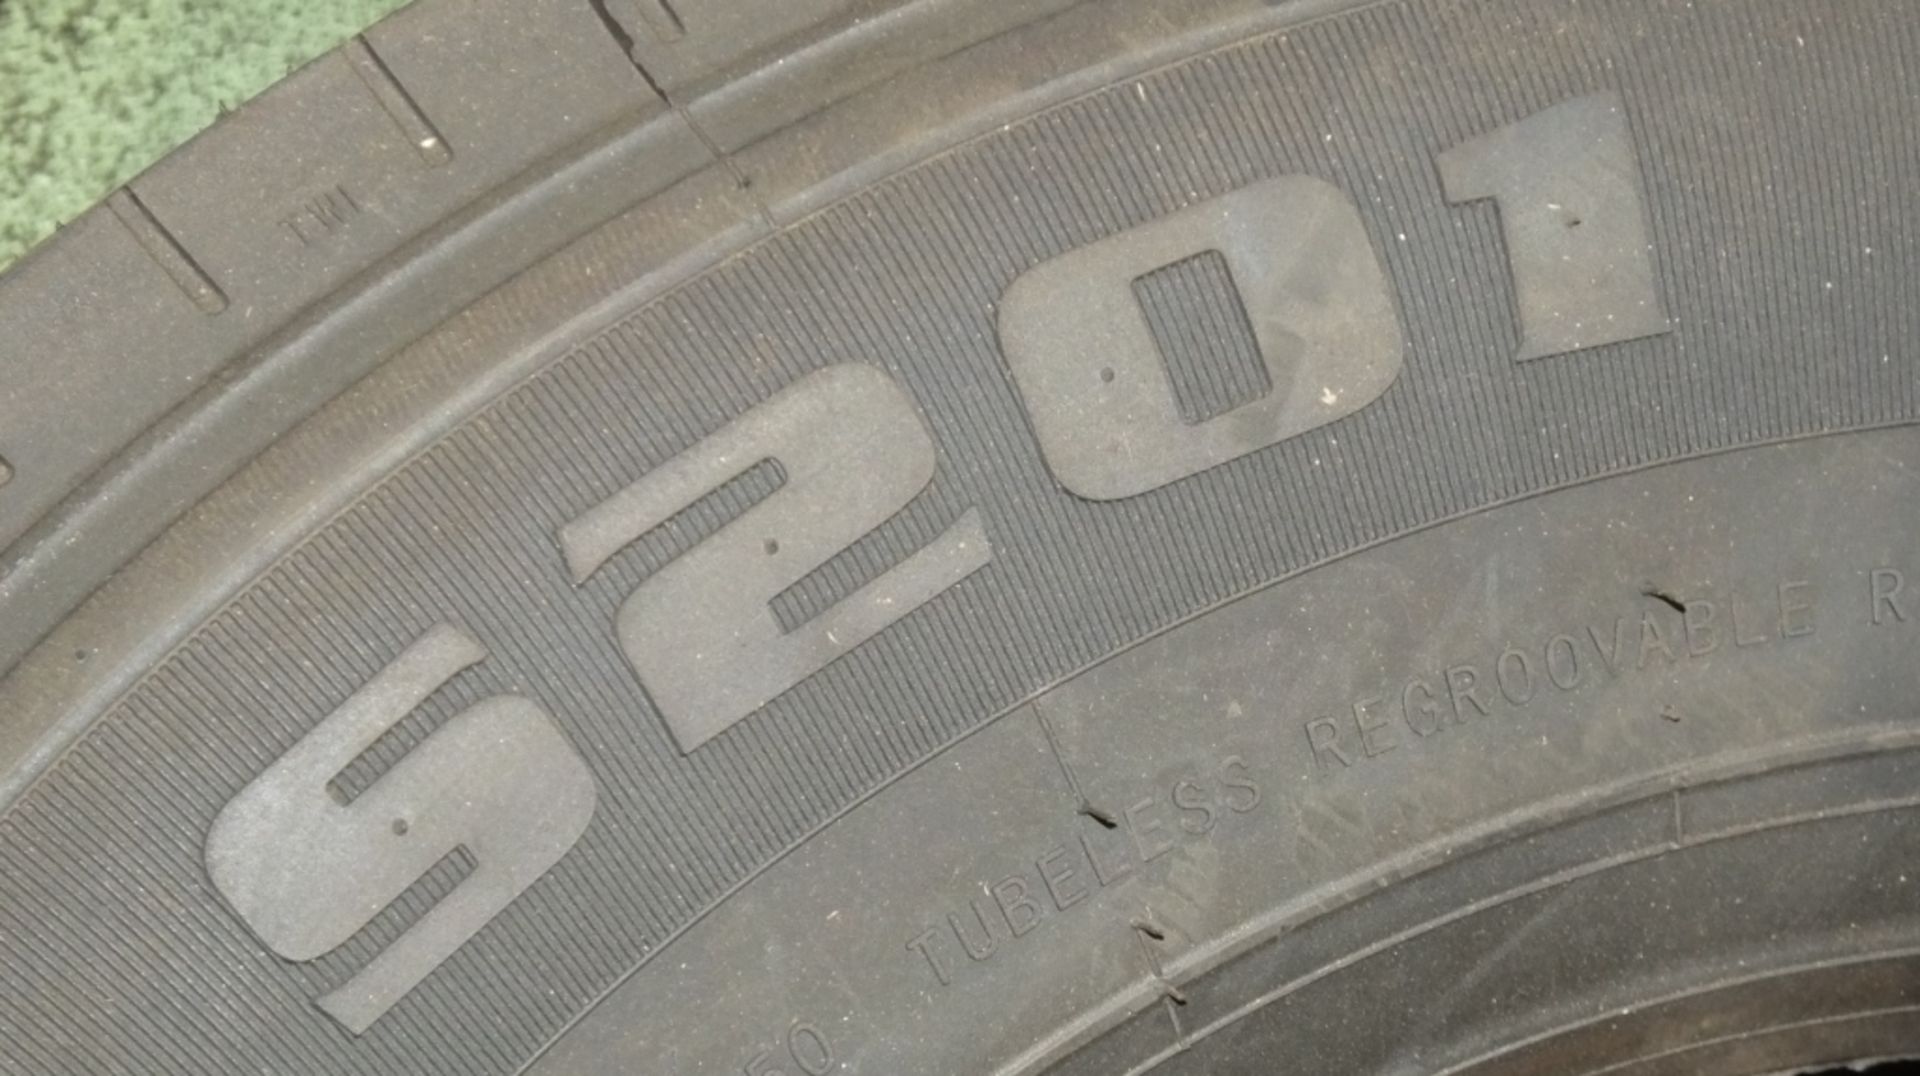 Alplus 265 / 70R 19.5 S201 tyre (new & unused) - Image 4 of 5